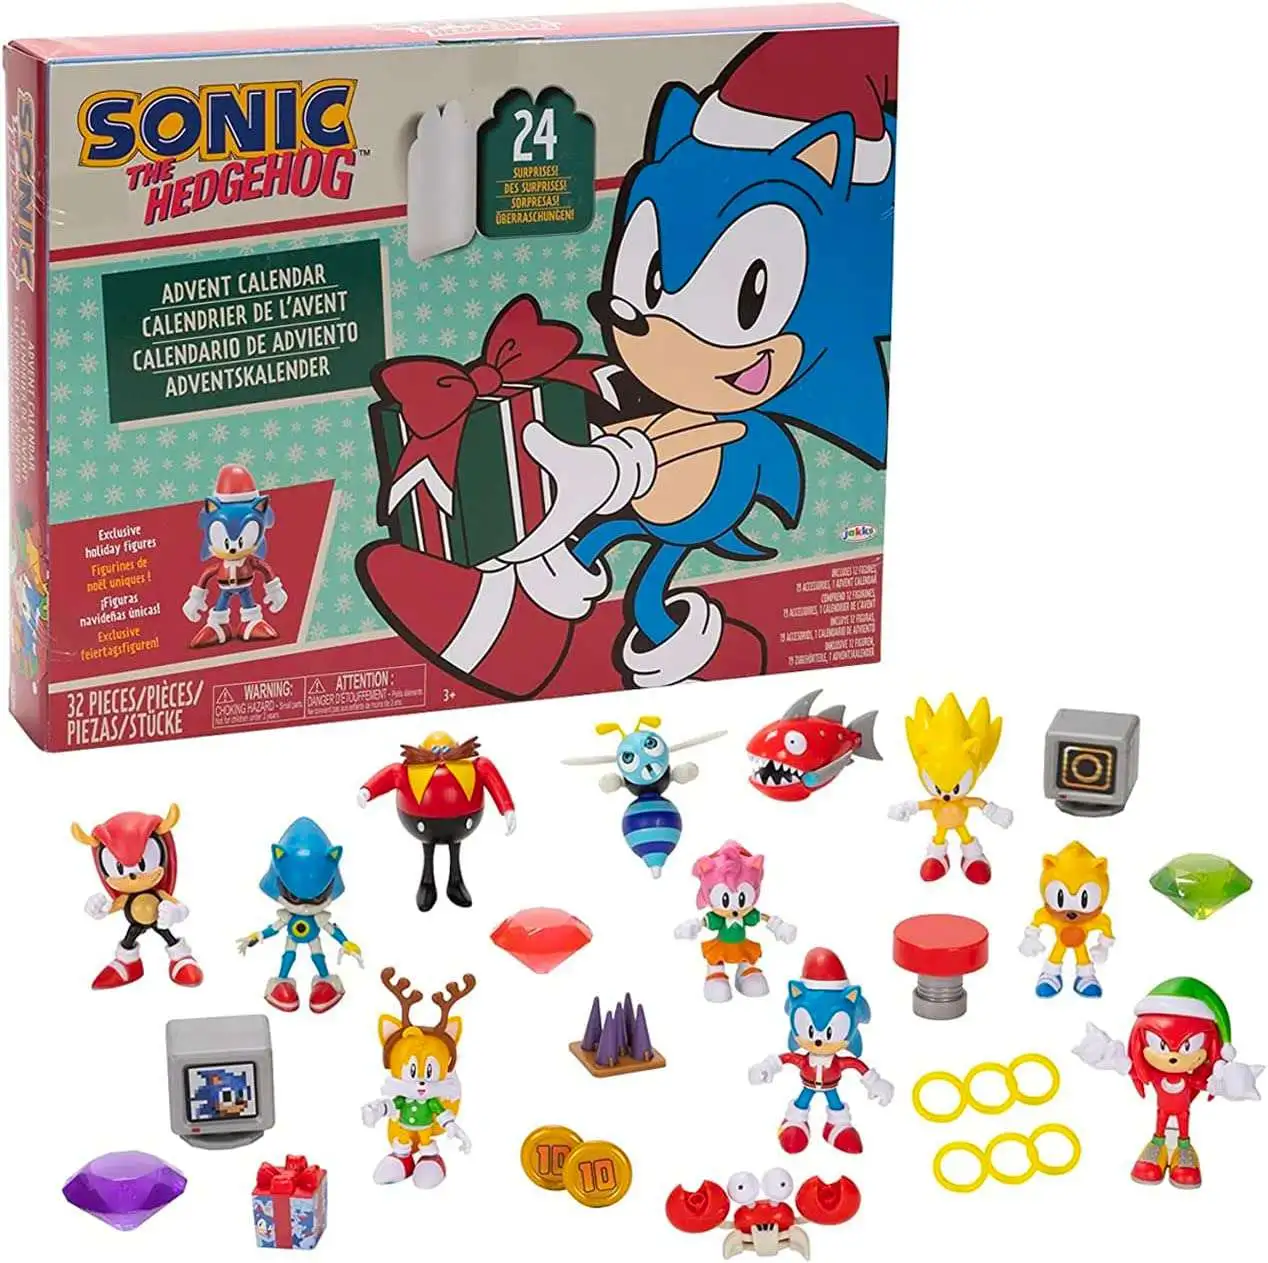 Sonic The Hedgehog Holiday Sonic The Hedgehog 2 5 Advent Calendar 24